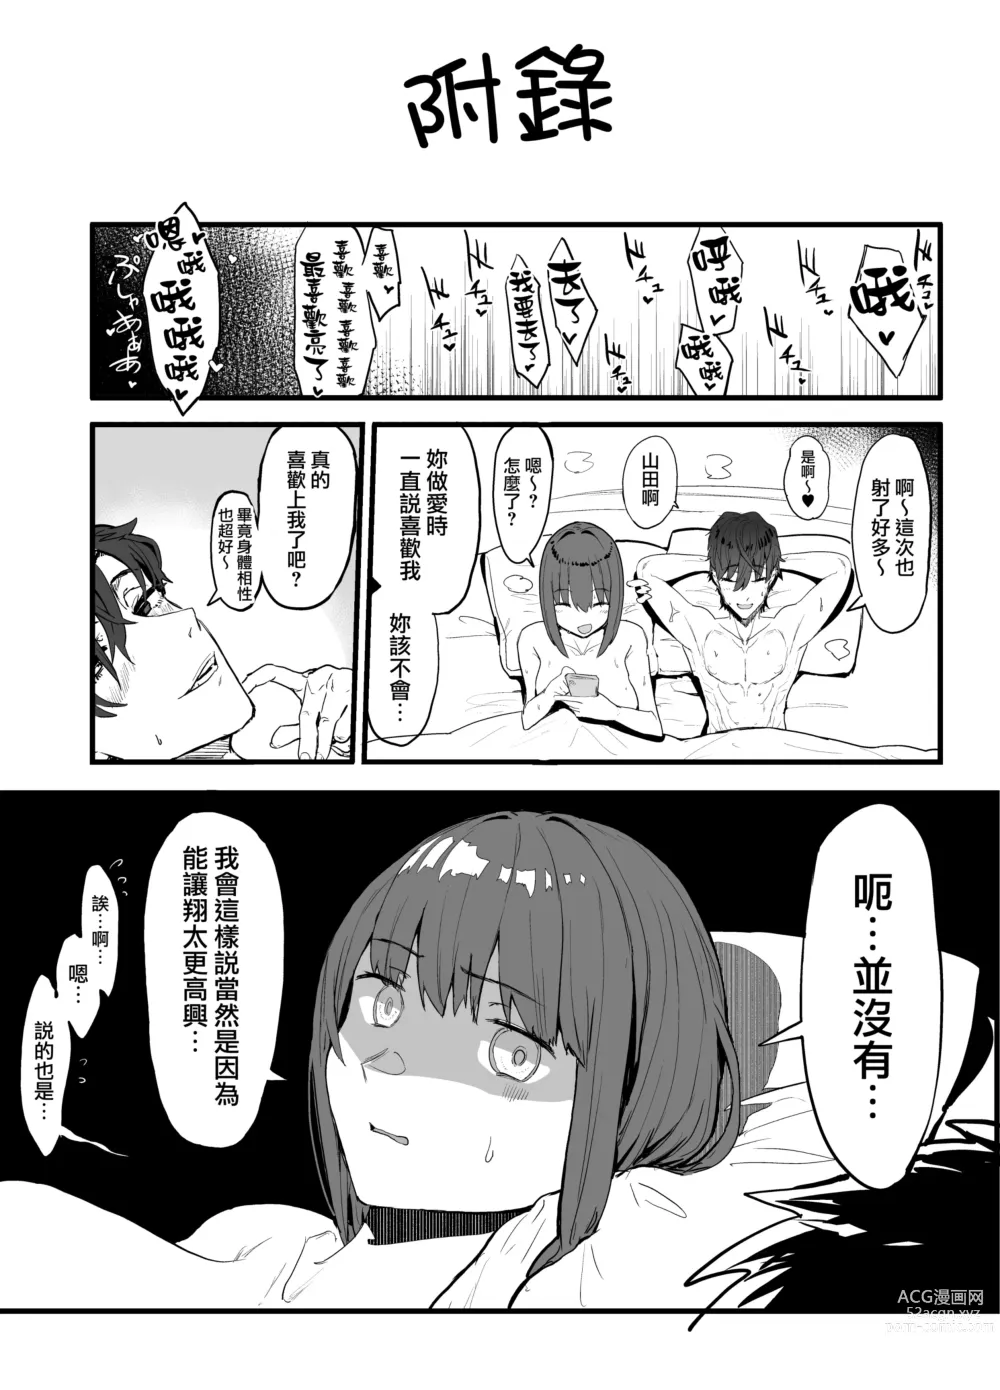 Page 72 of doujinshi Netorase Club